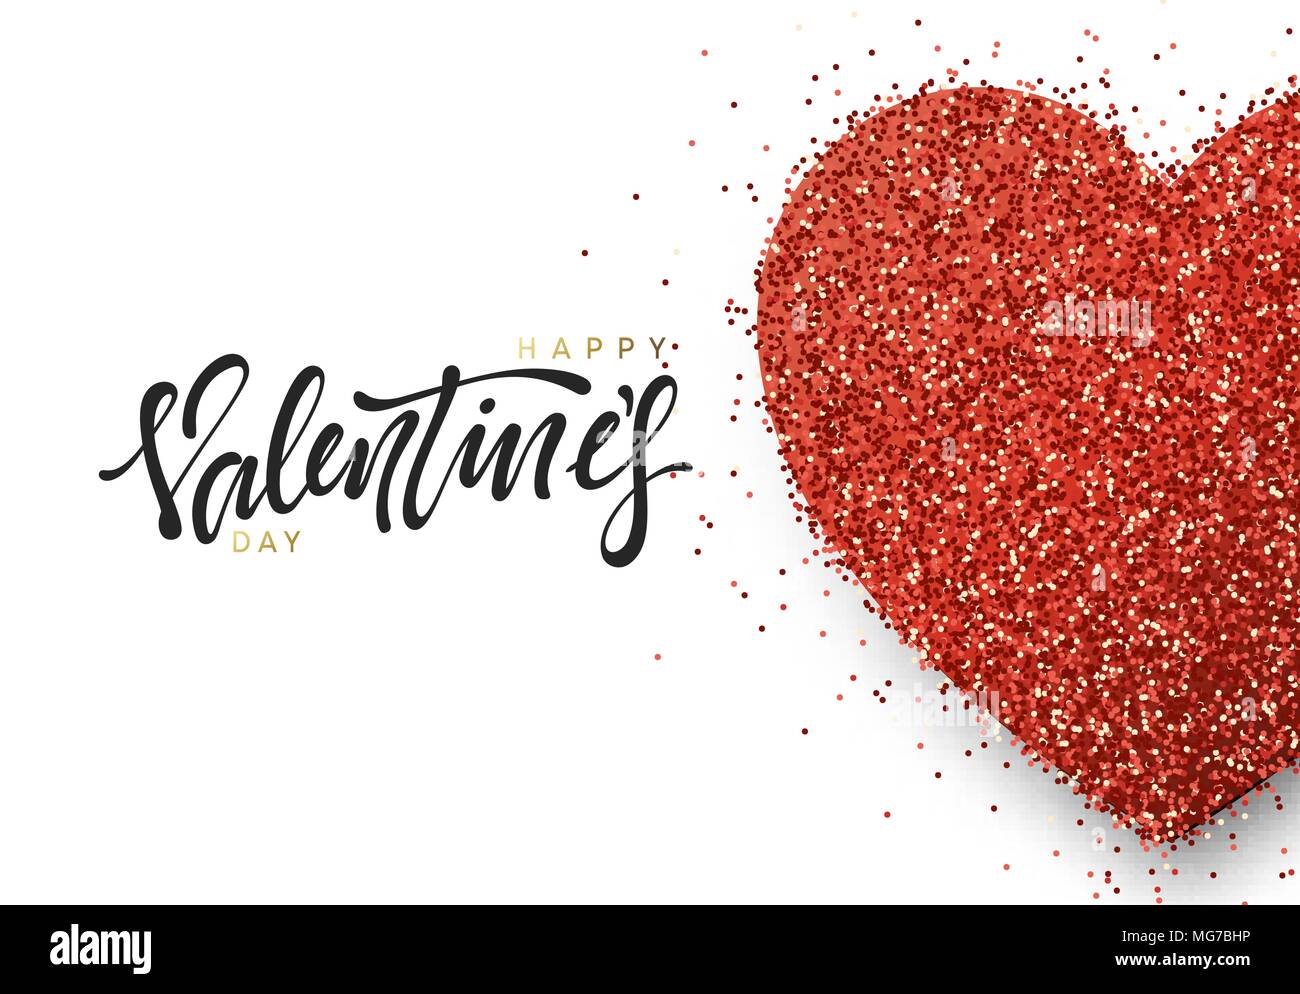 Happy Valentine's Day Greeting Card Design mit Herzen hell funkeln, Vektor illustrtation. Stock Vektor